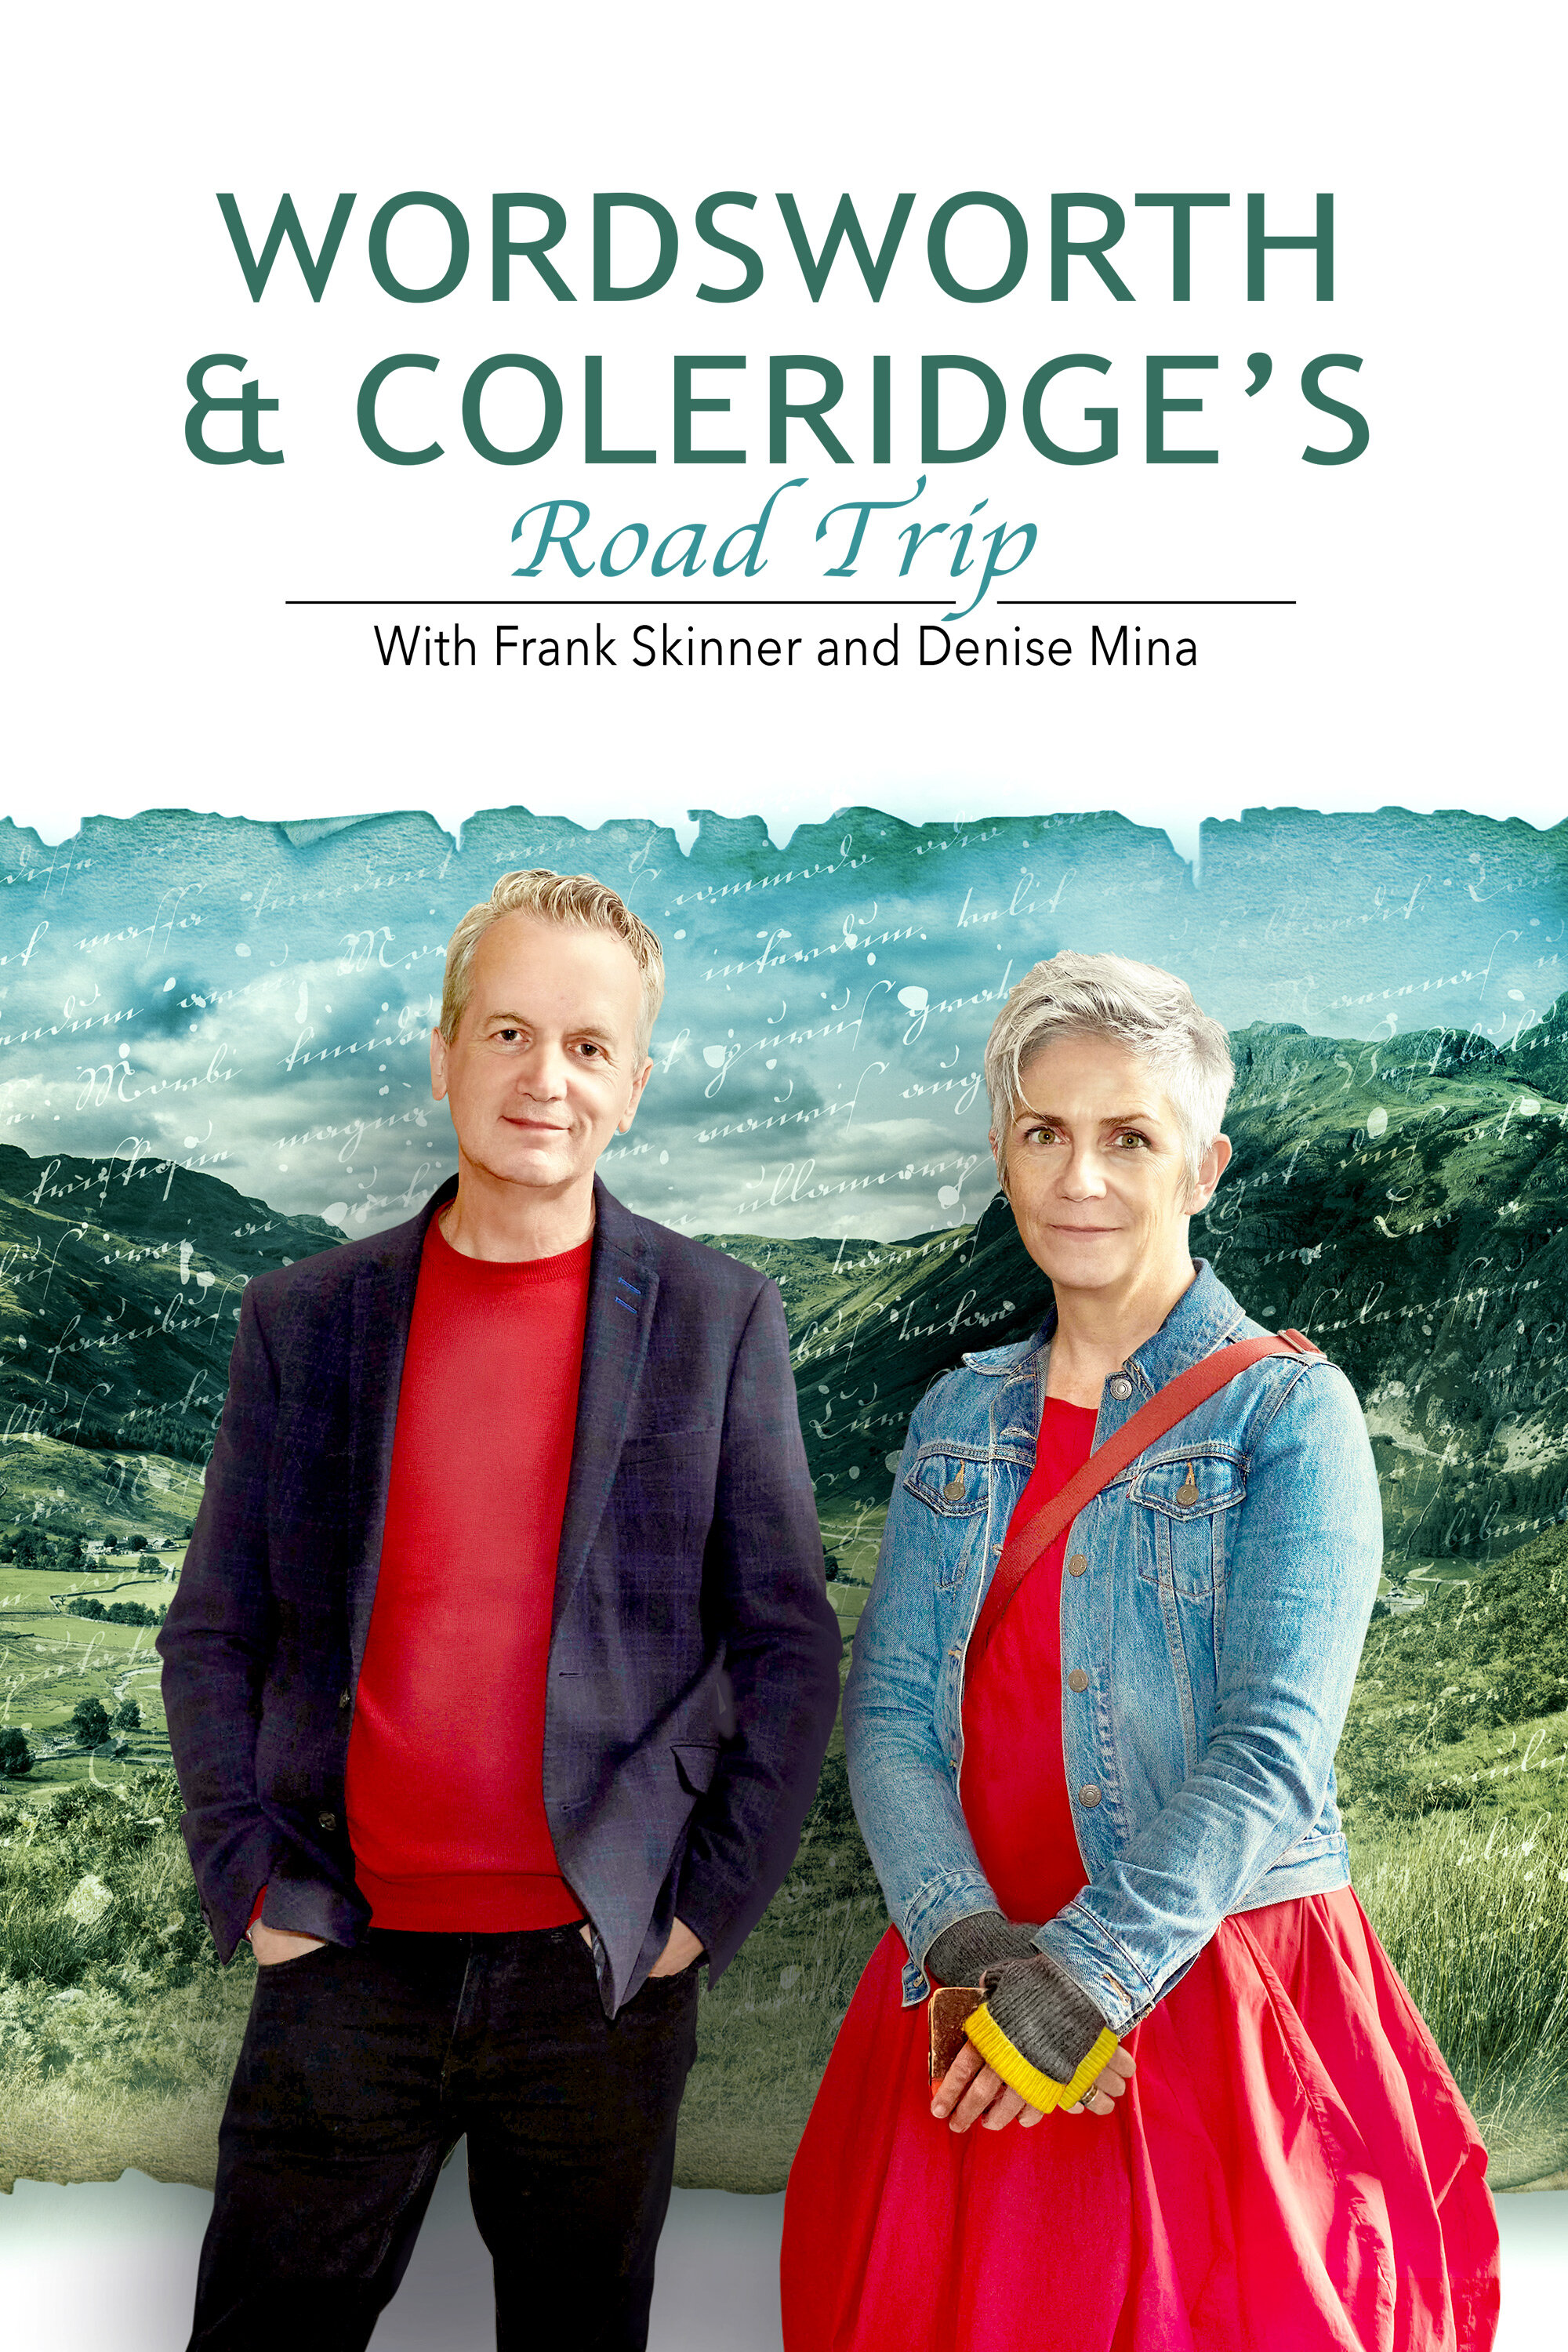 Wordsworth & Coleridge Road Trip with Frank Skinner and Denise Mina ne zaman